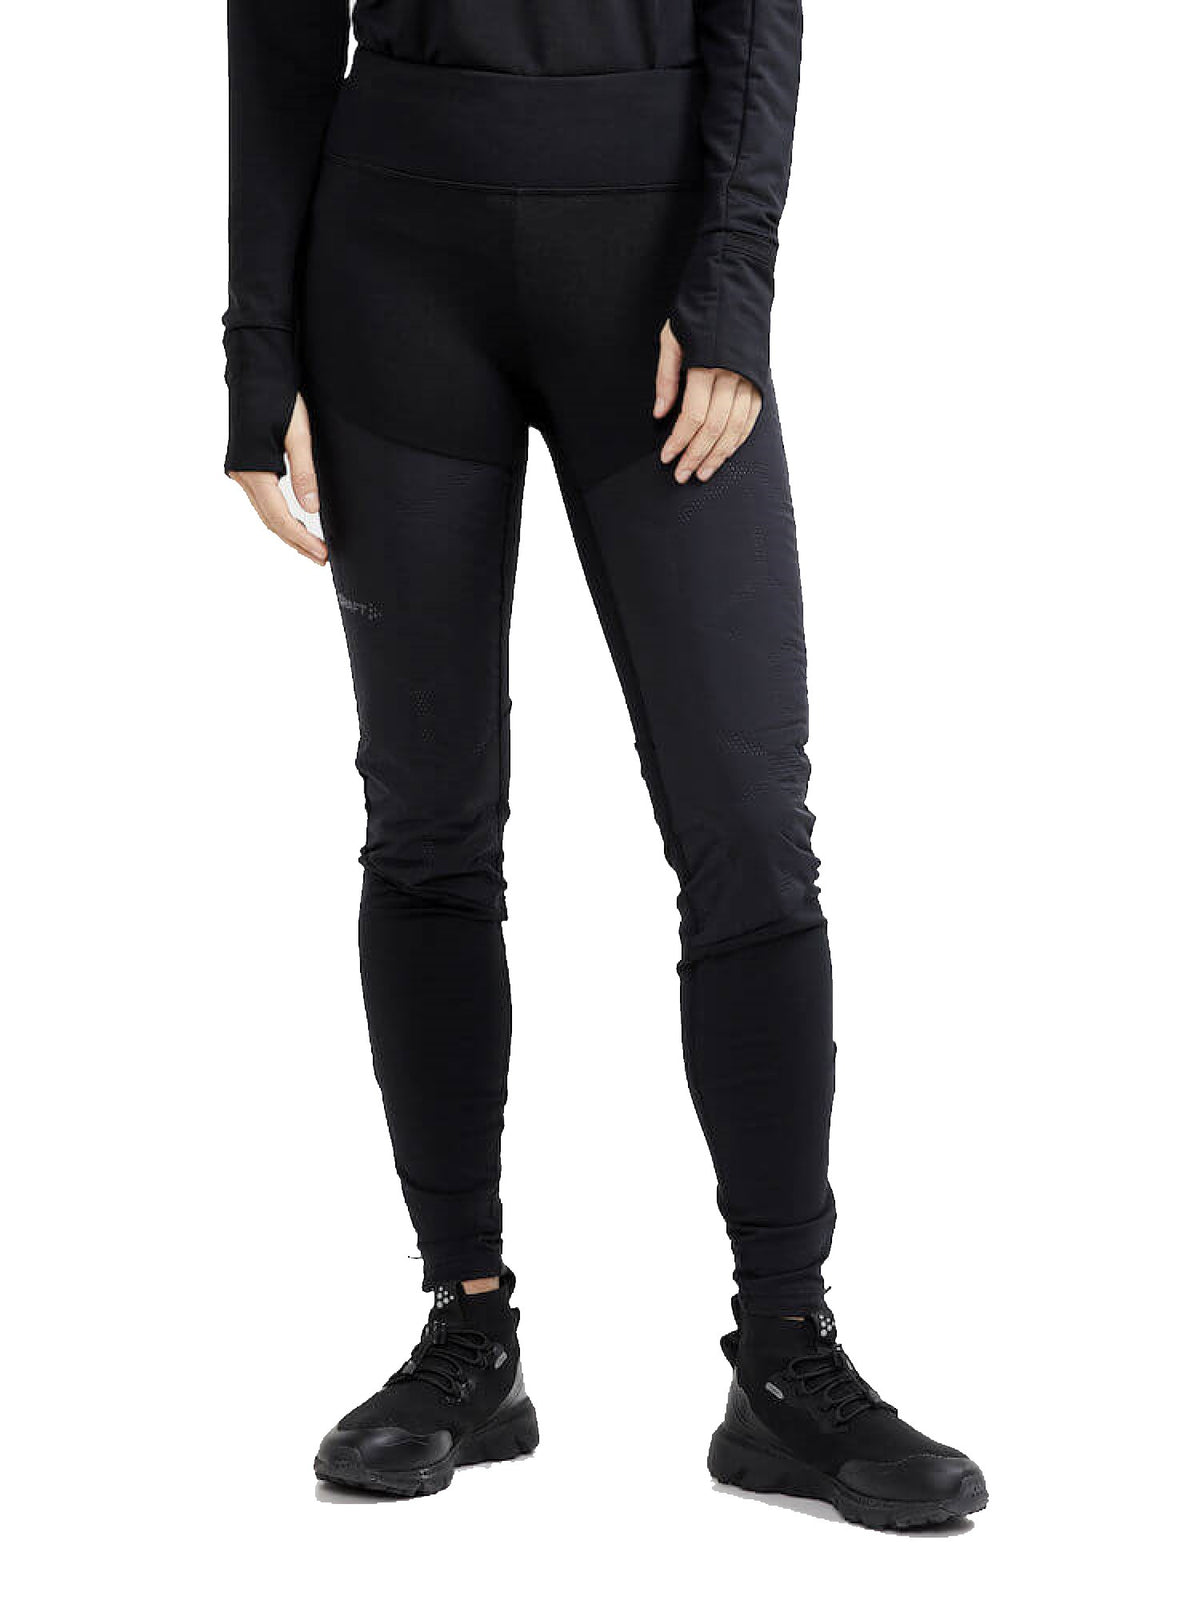 Craft Glide Women's XC Ski Pants - Black / XS